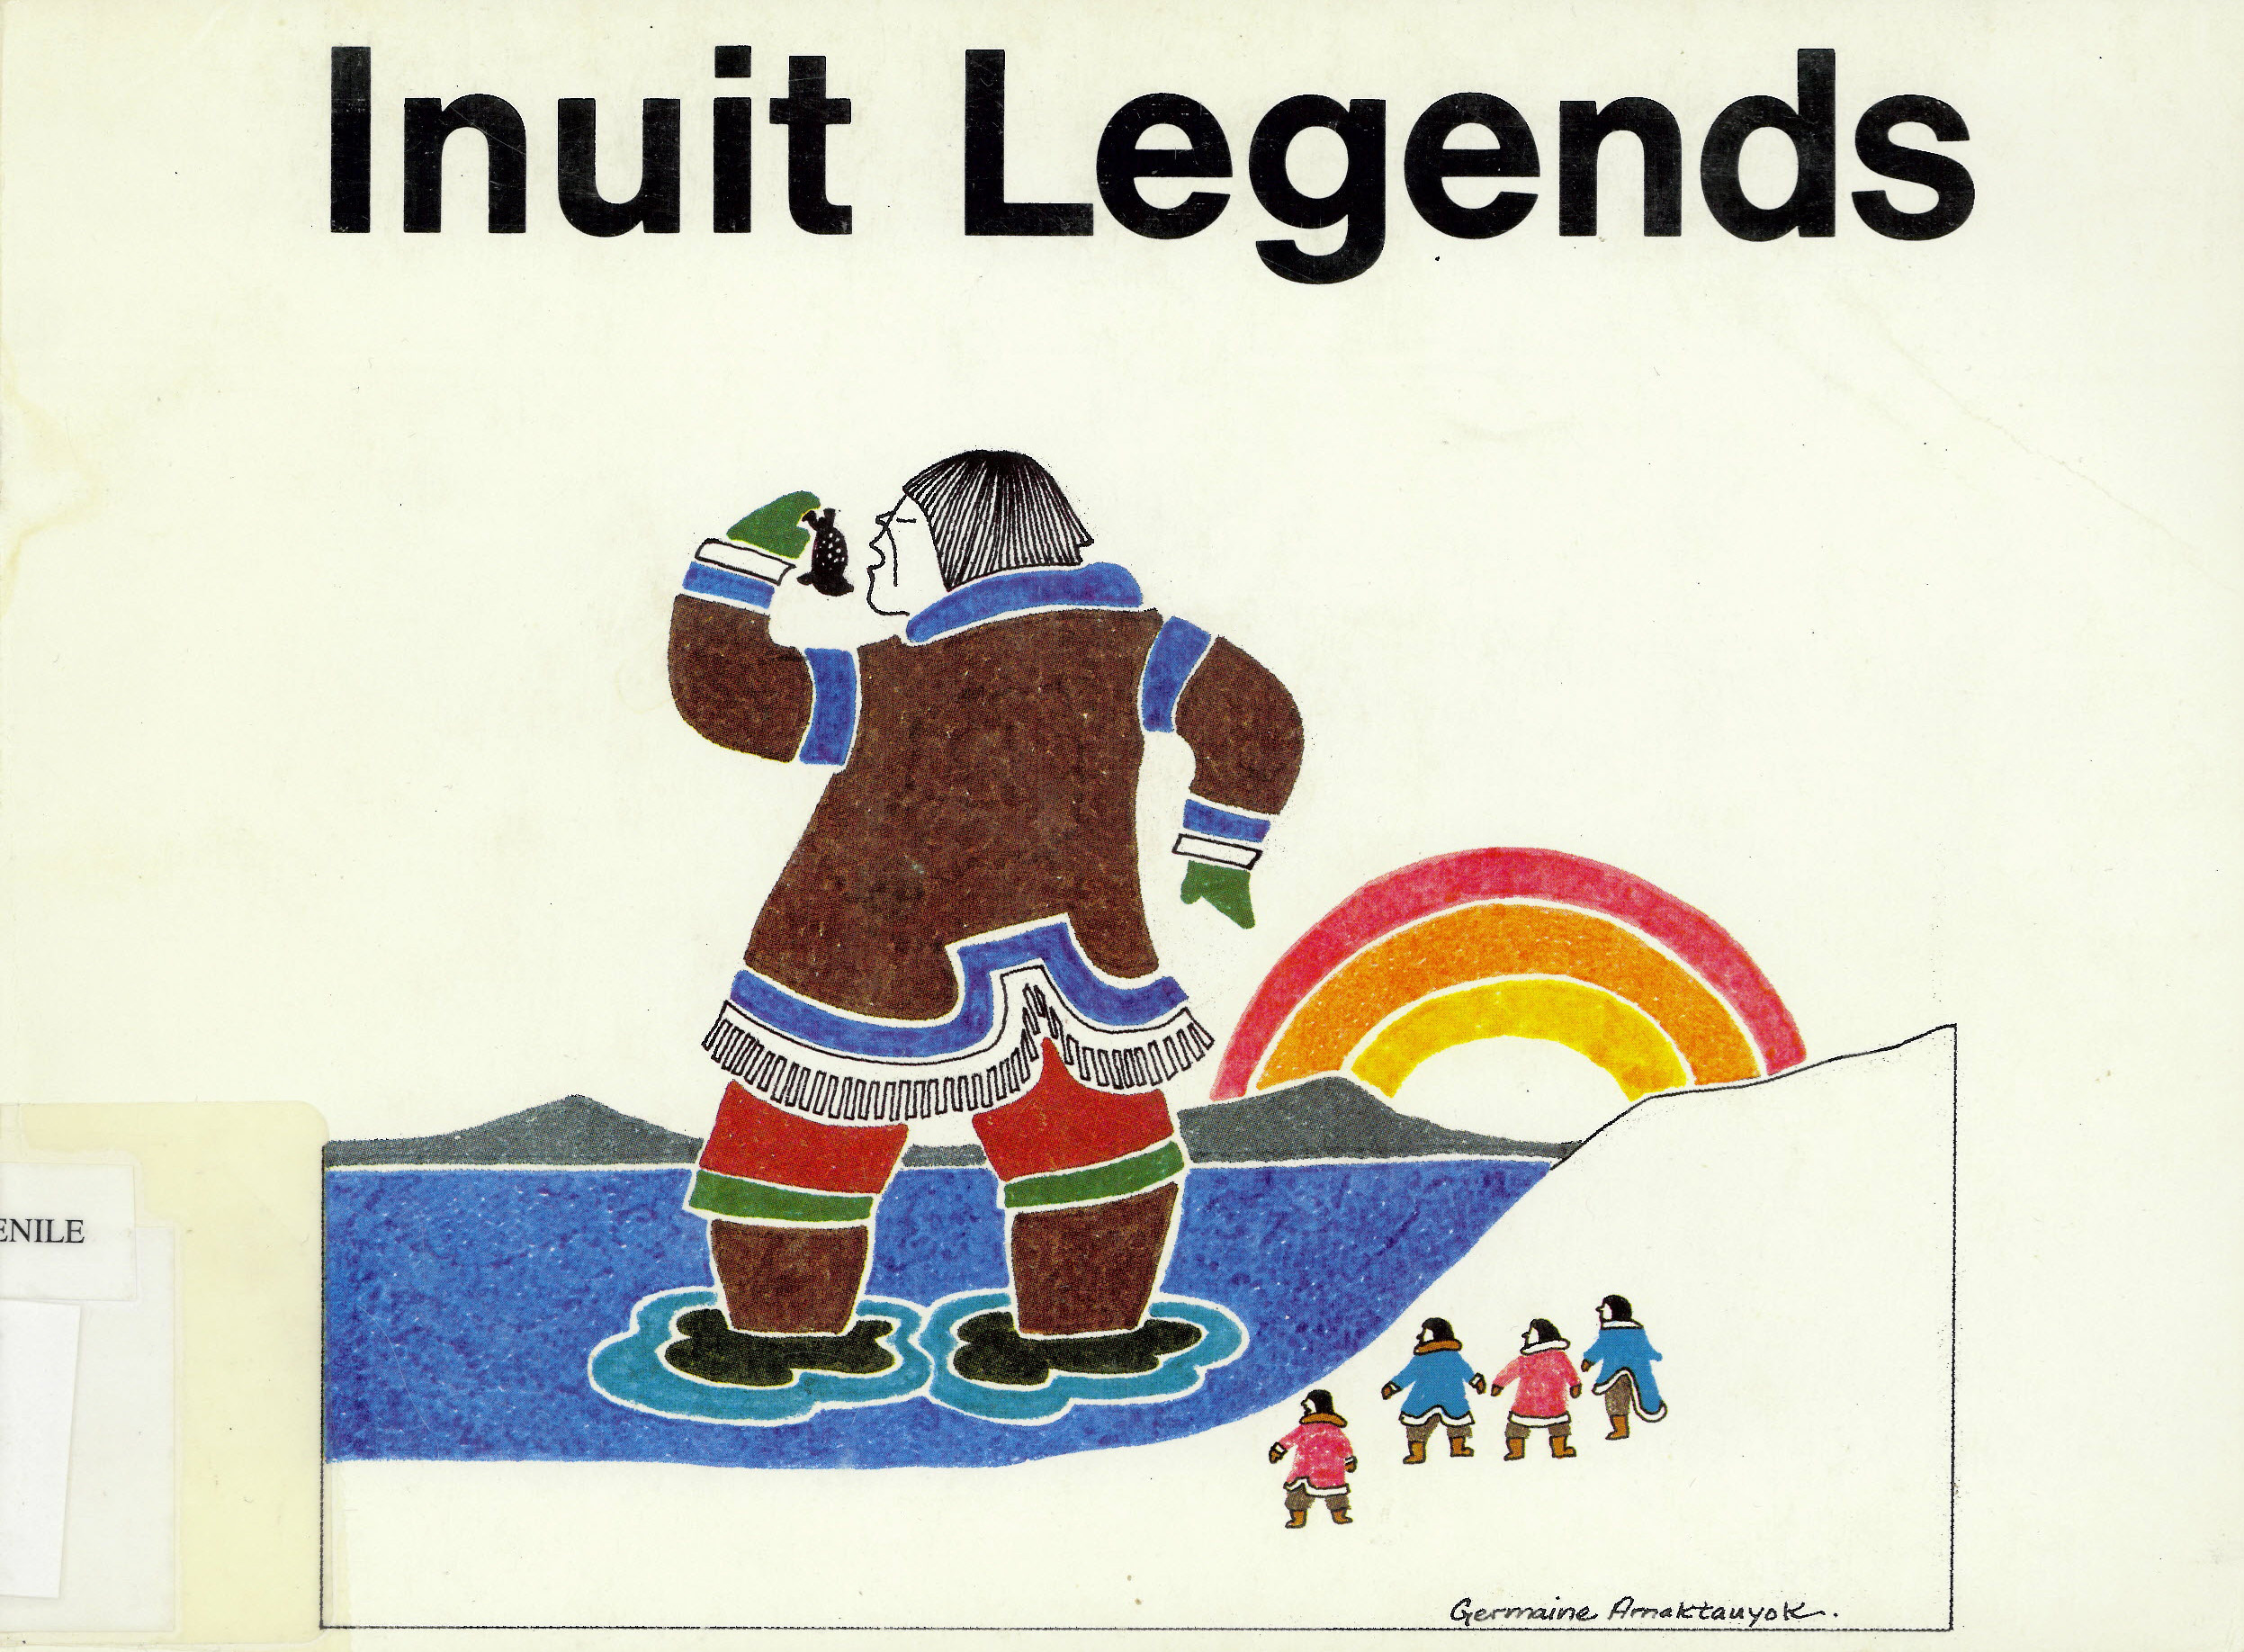 Inuit legends